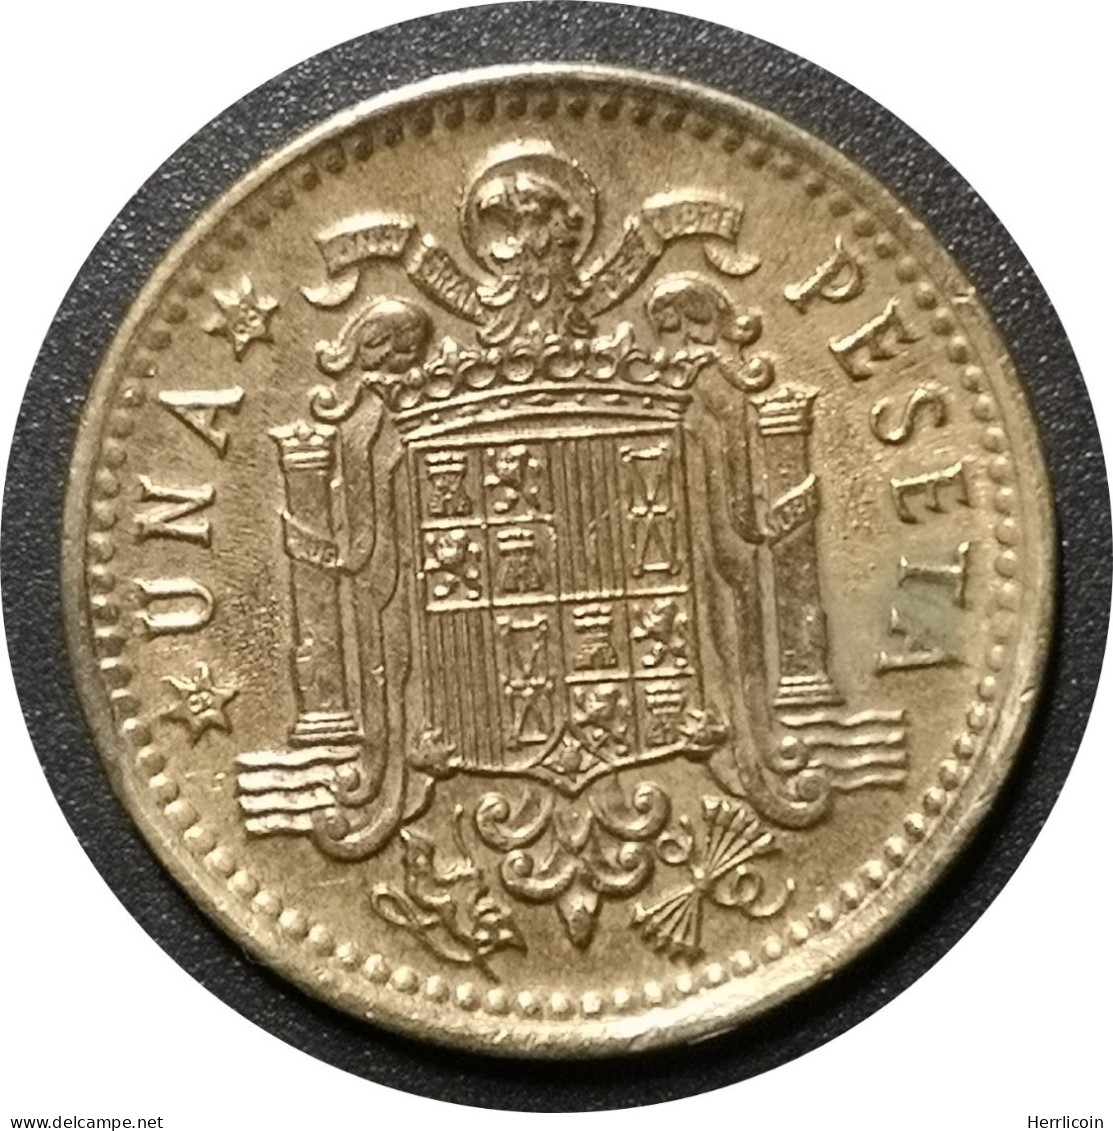 Monnaie Espagne - 1968 (1966) - 1 Peseta Franco 2e Effigie - 1 Peseta